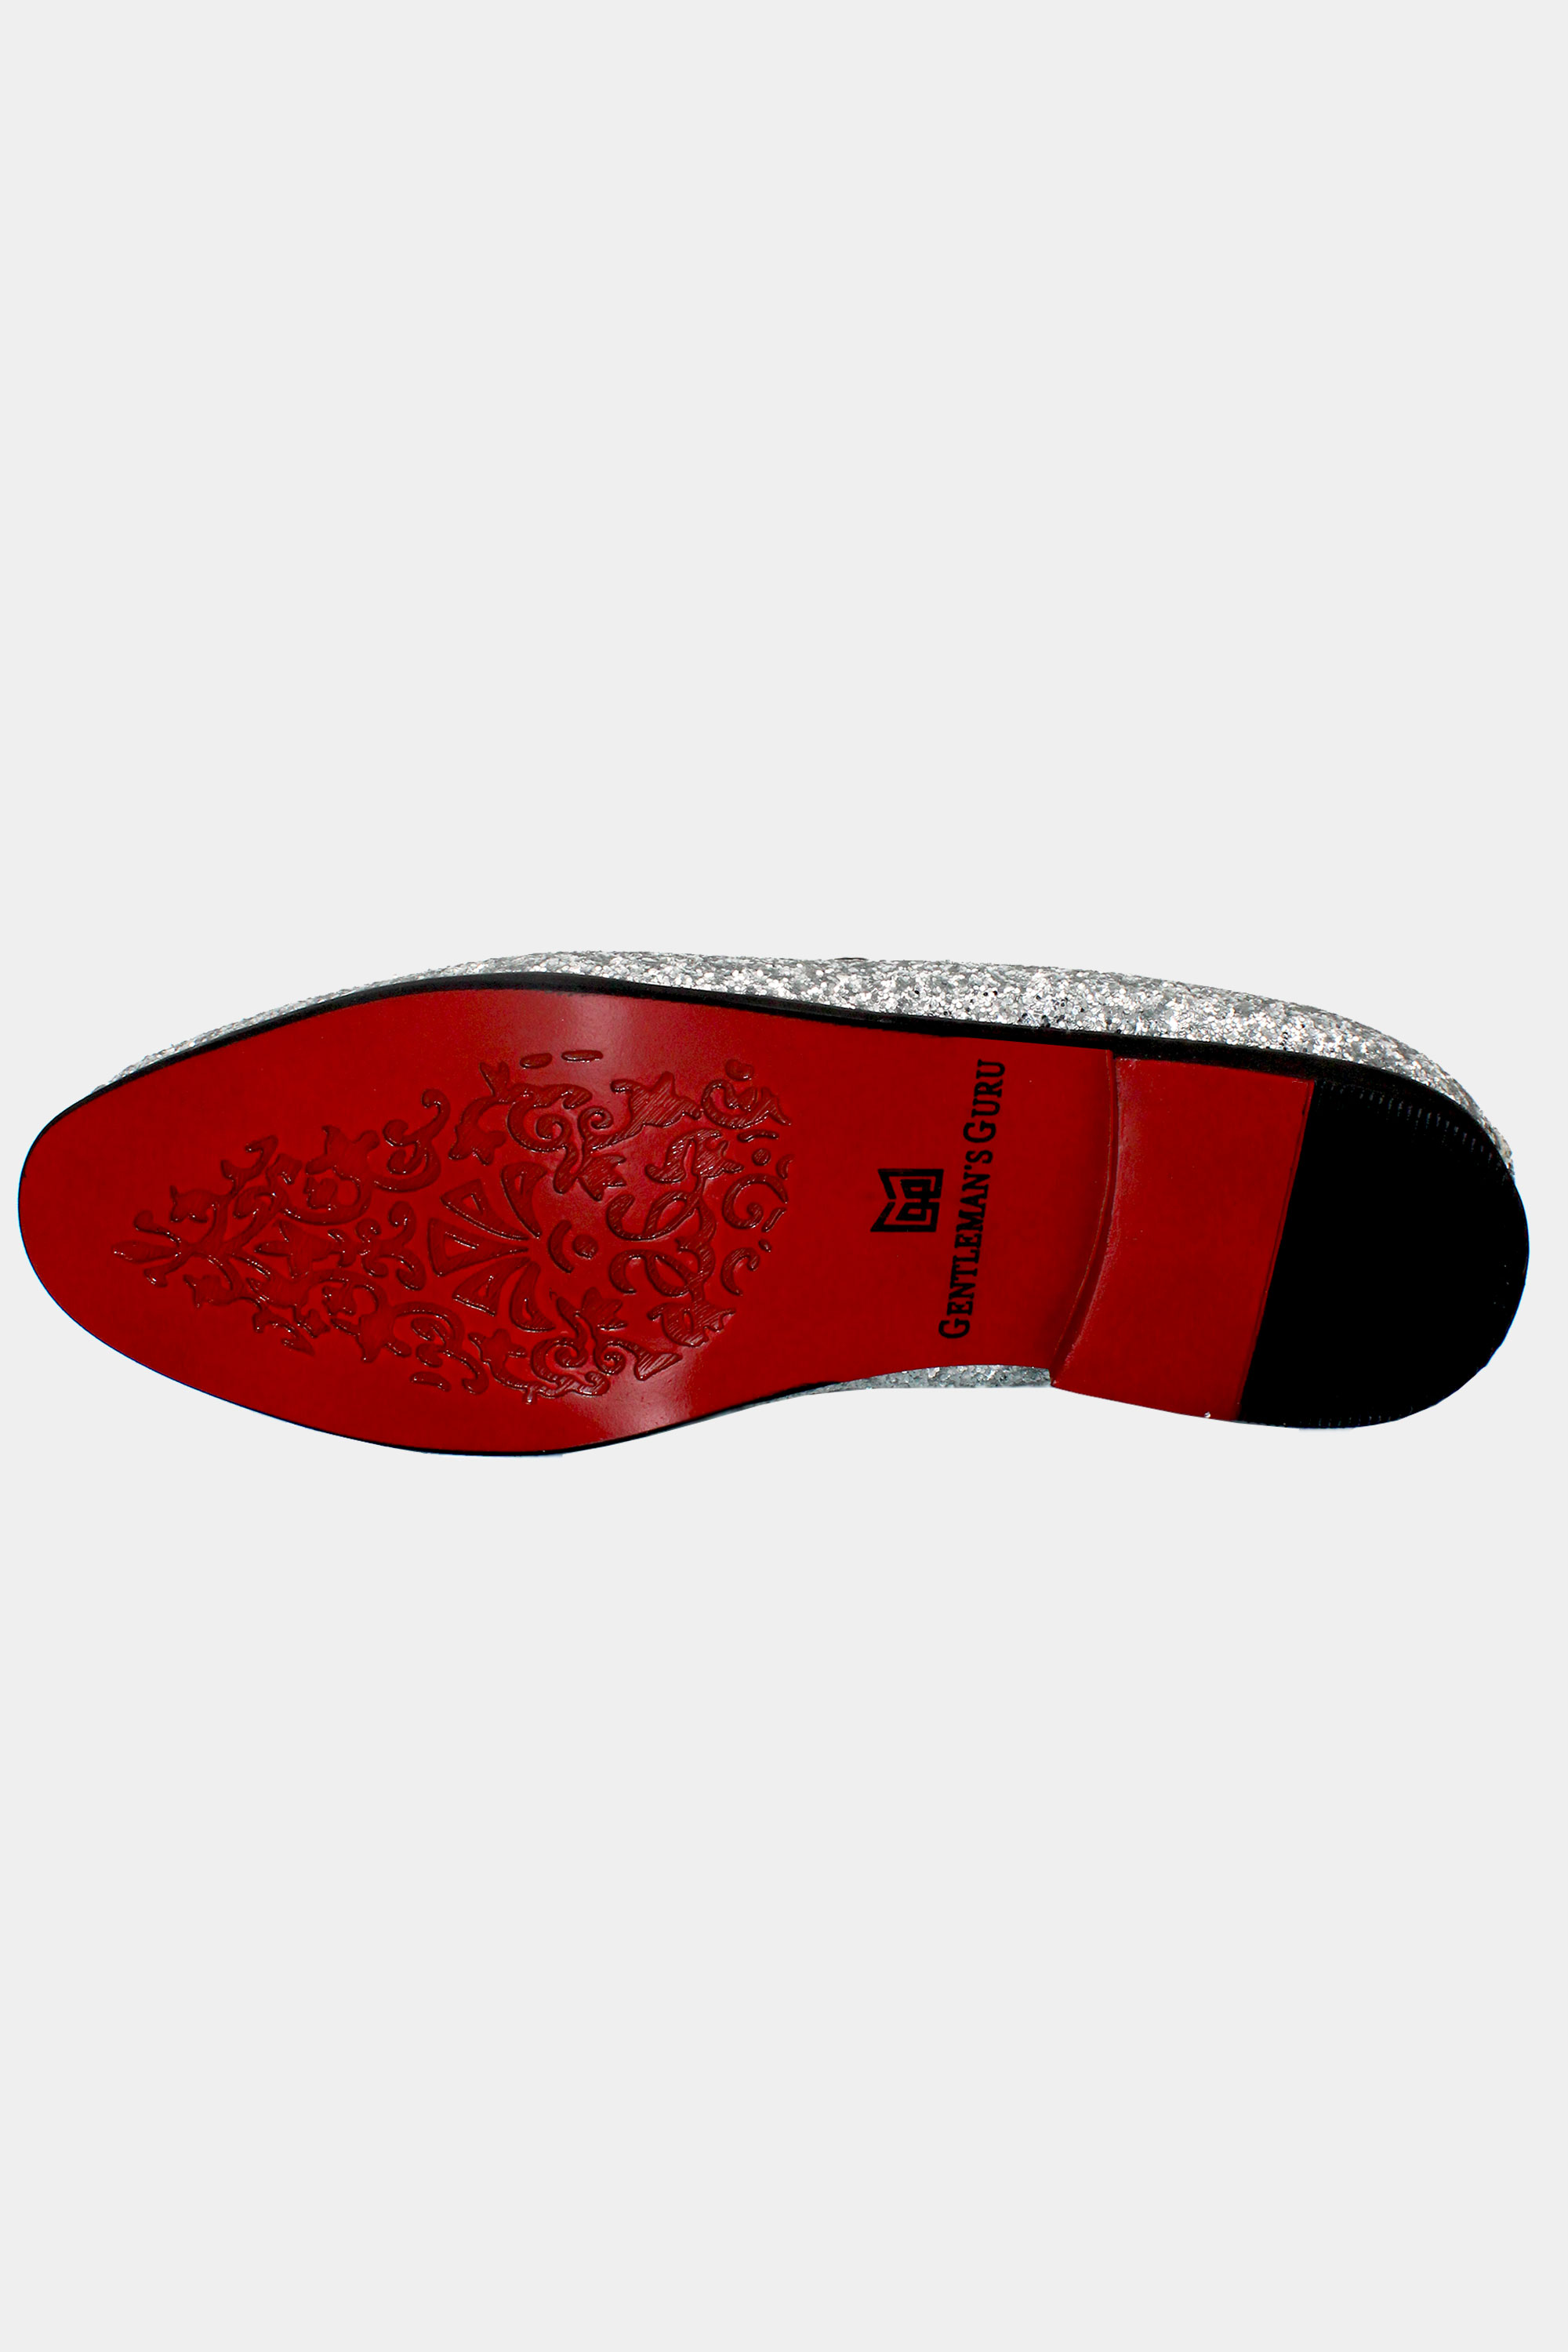 Luxury-Expensive-Designer-Loafer-Shoes-from-Gentlemansguru.com